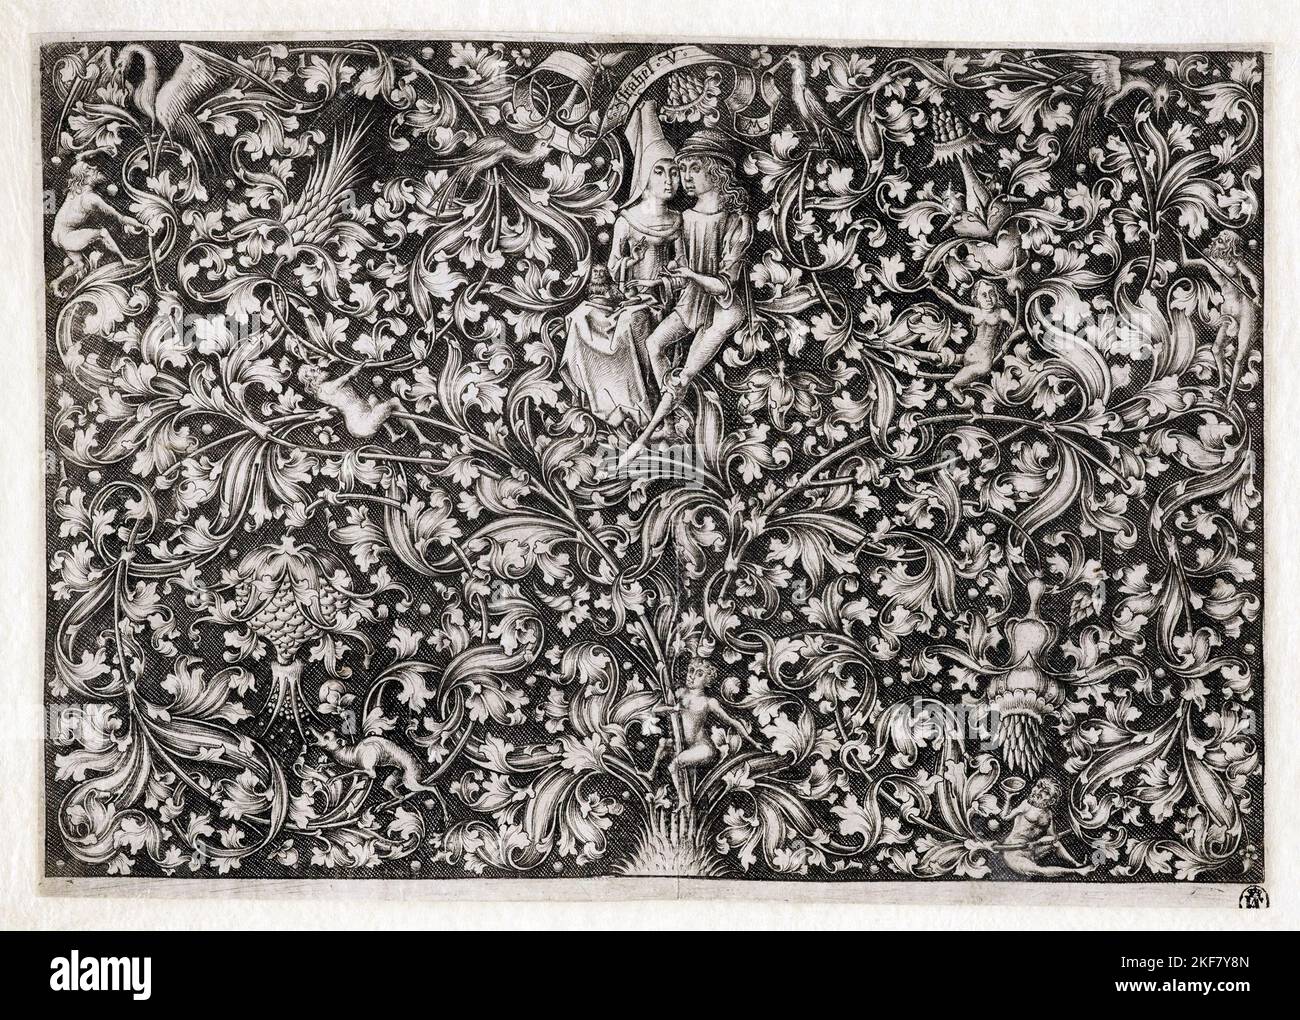 Israhel van Meckenem; Garden of Love; Circa 1490; Engraving; Metropolitan Museum of Art, New York City, USA. Stock Photo